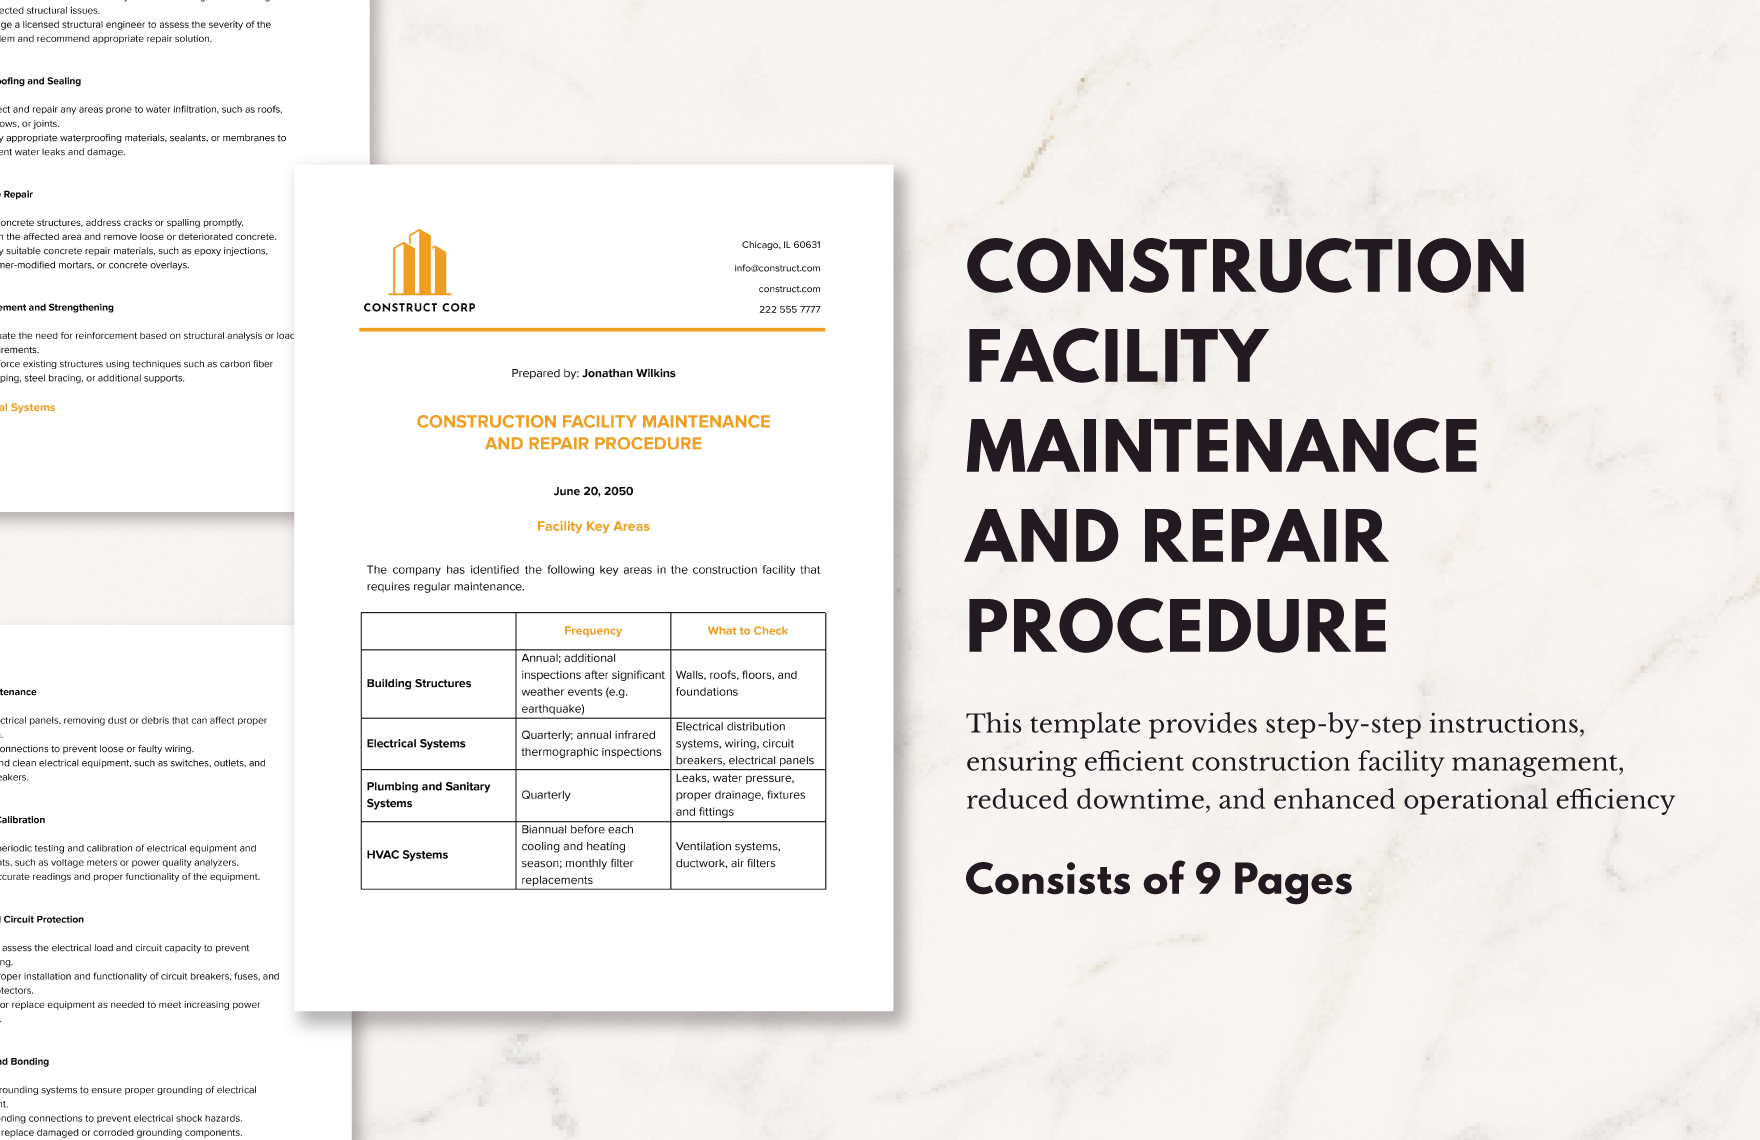 Construction Facility Maintenance and Repair Procedure